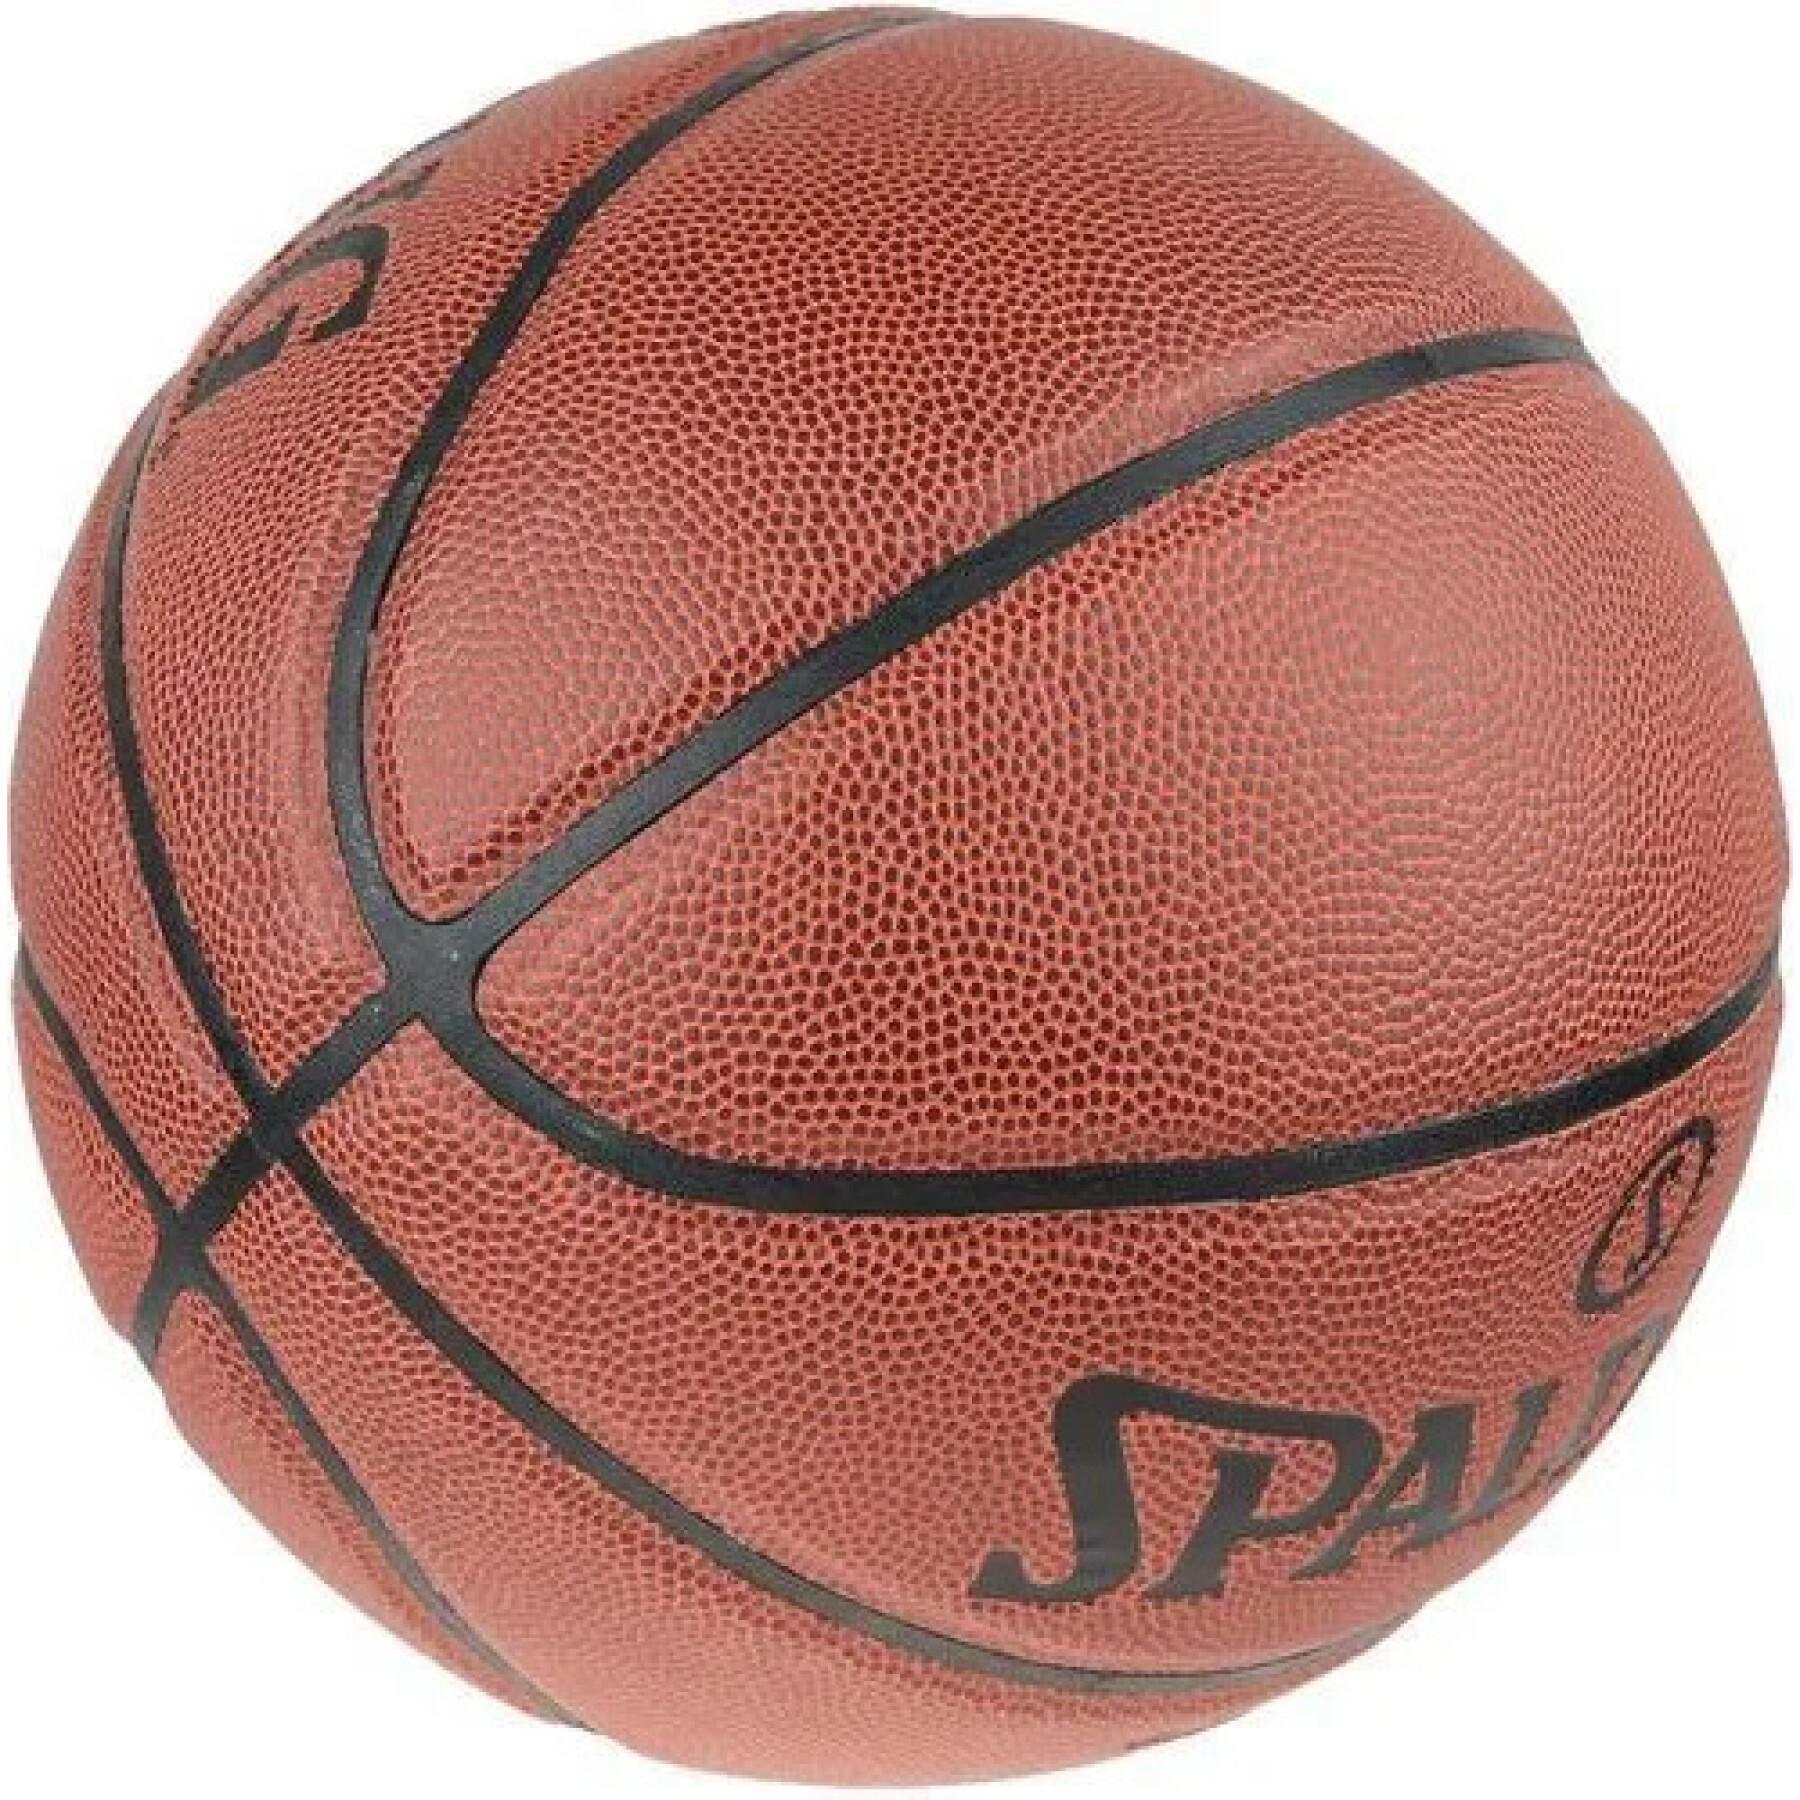 Balon Spalding NBA Grip Control in/out orange